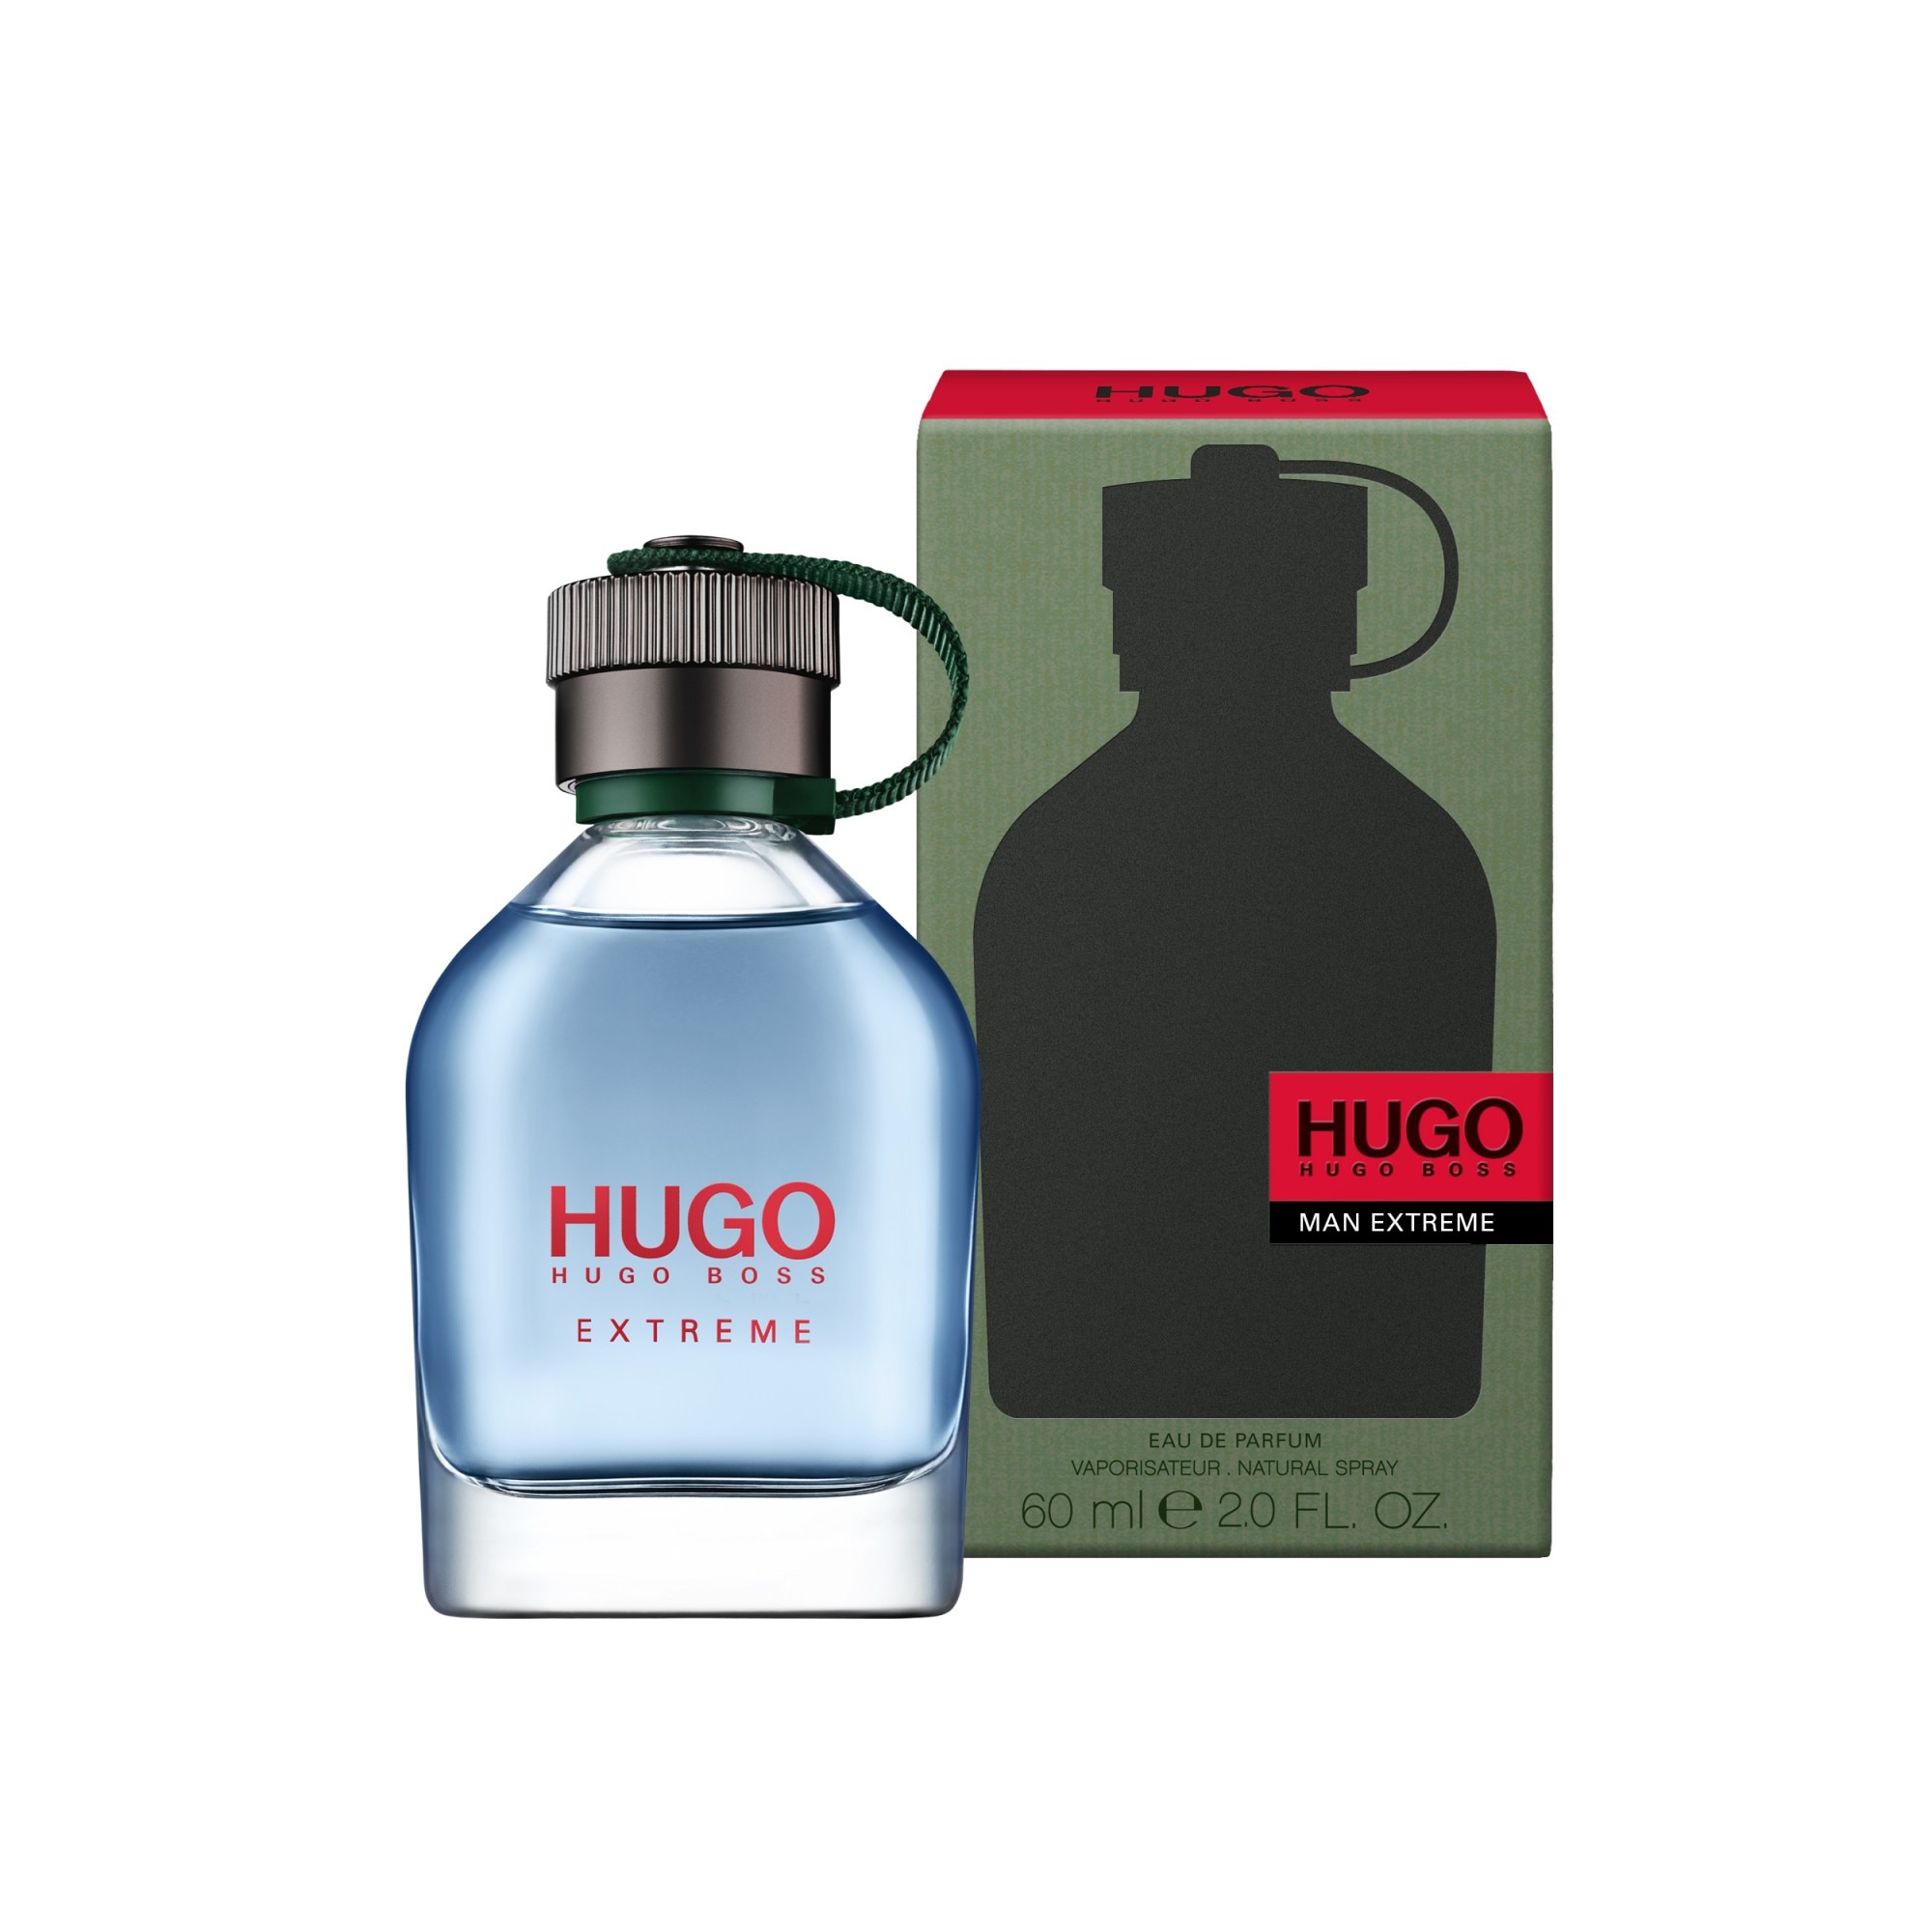 Hugo страна. Hugo Boss Hugo man Eau de Toilette. Hugo Boss Hugo men 100 мл. Hugo Boss "Hugo" Eau de Toilette 100ml for men. Hugo Boss man 125 ml.